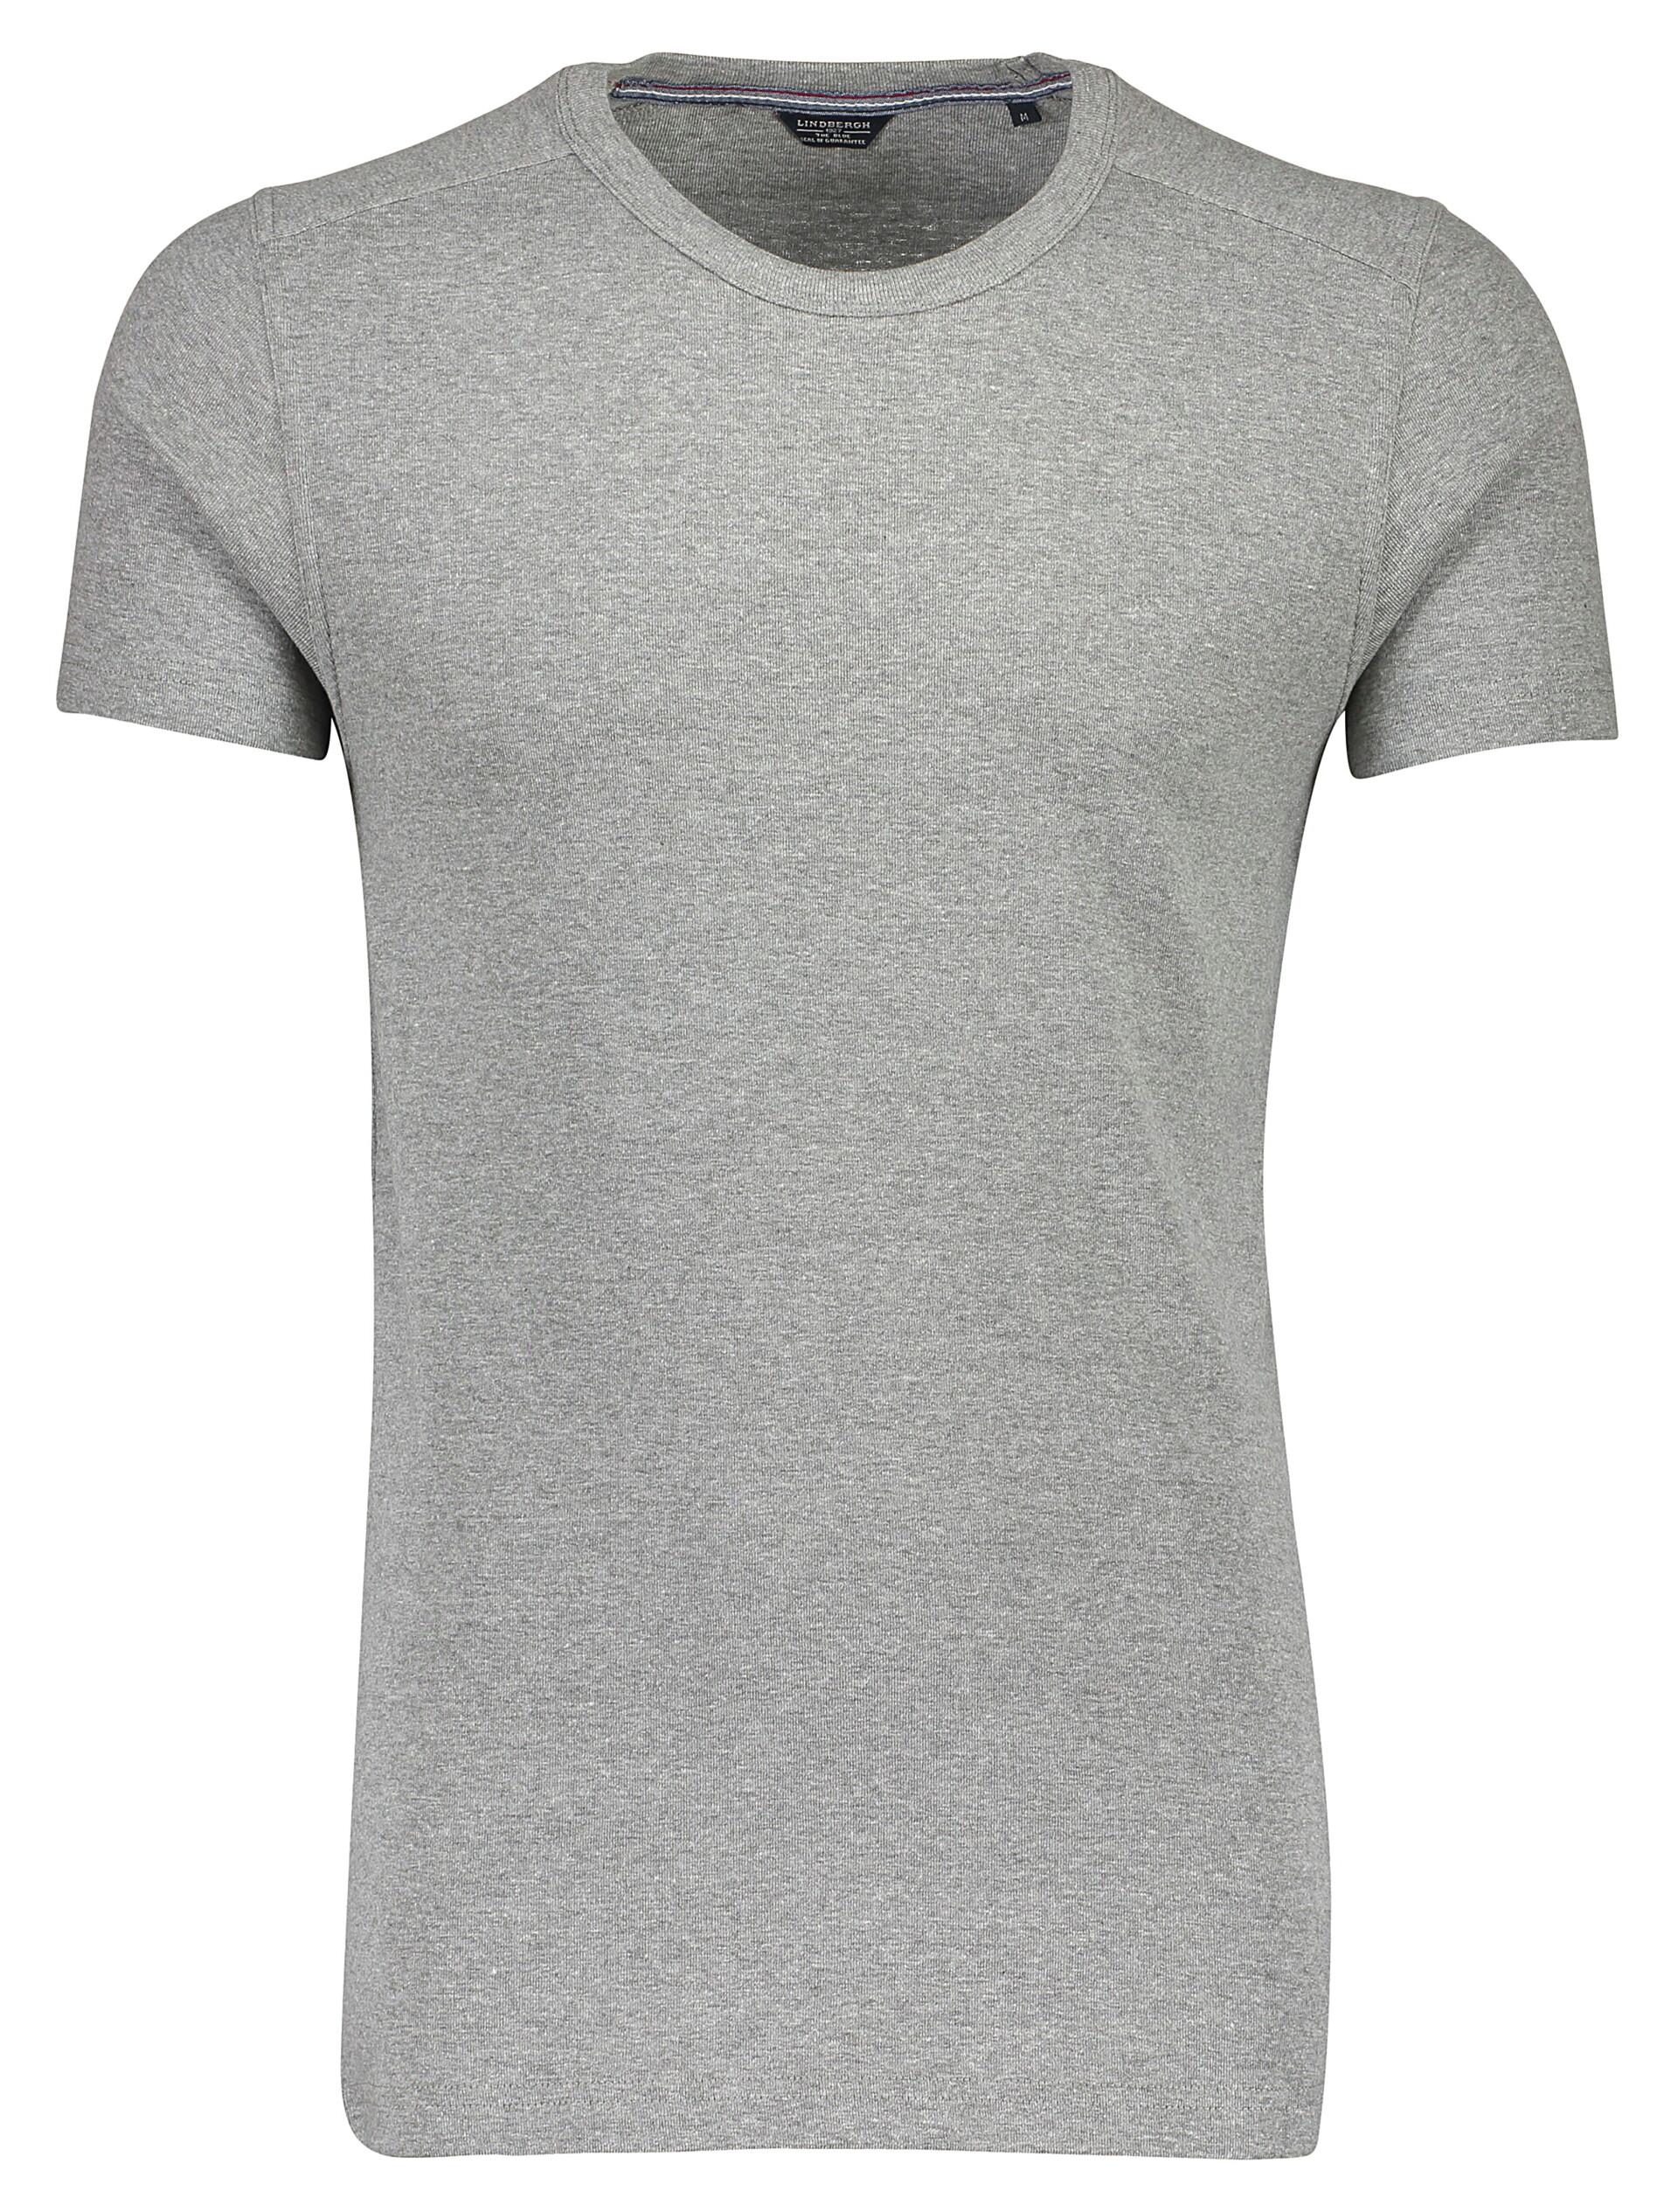 Lindbergh T-shirt grau / grey mel.